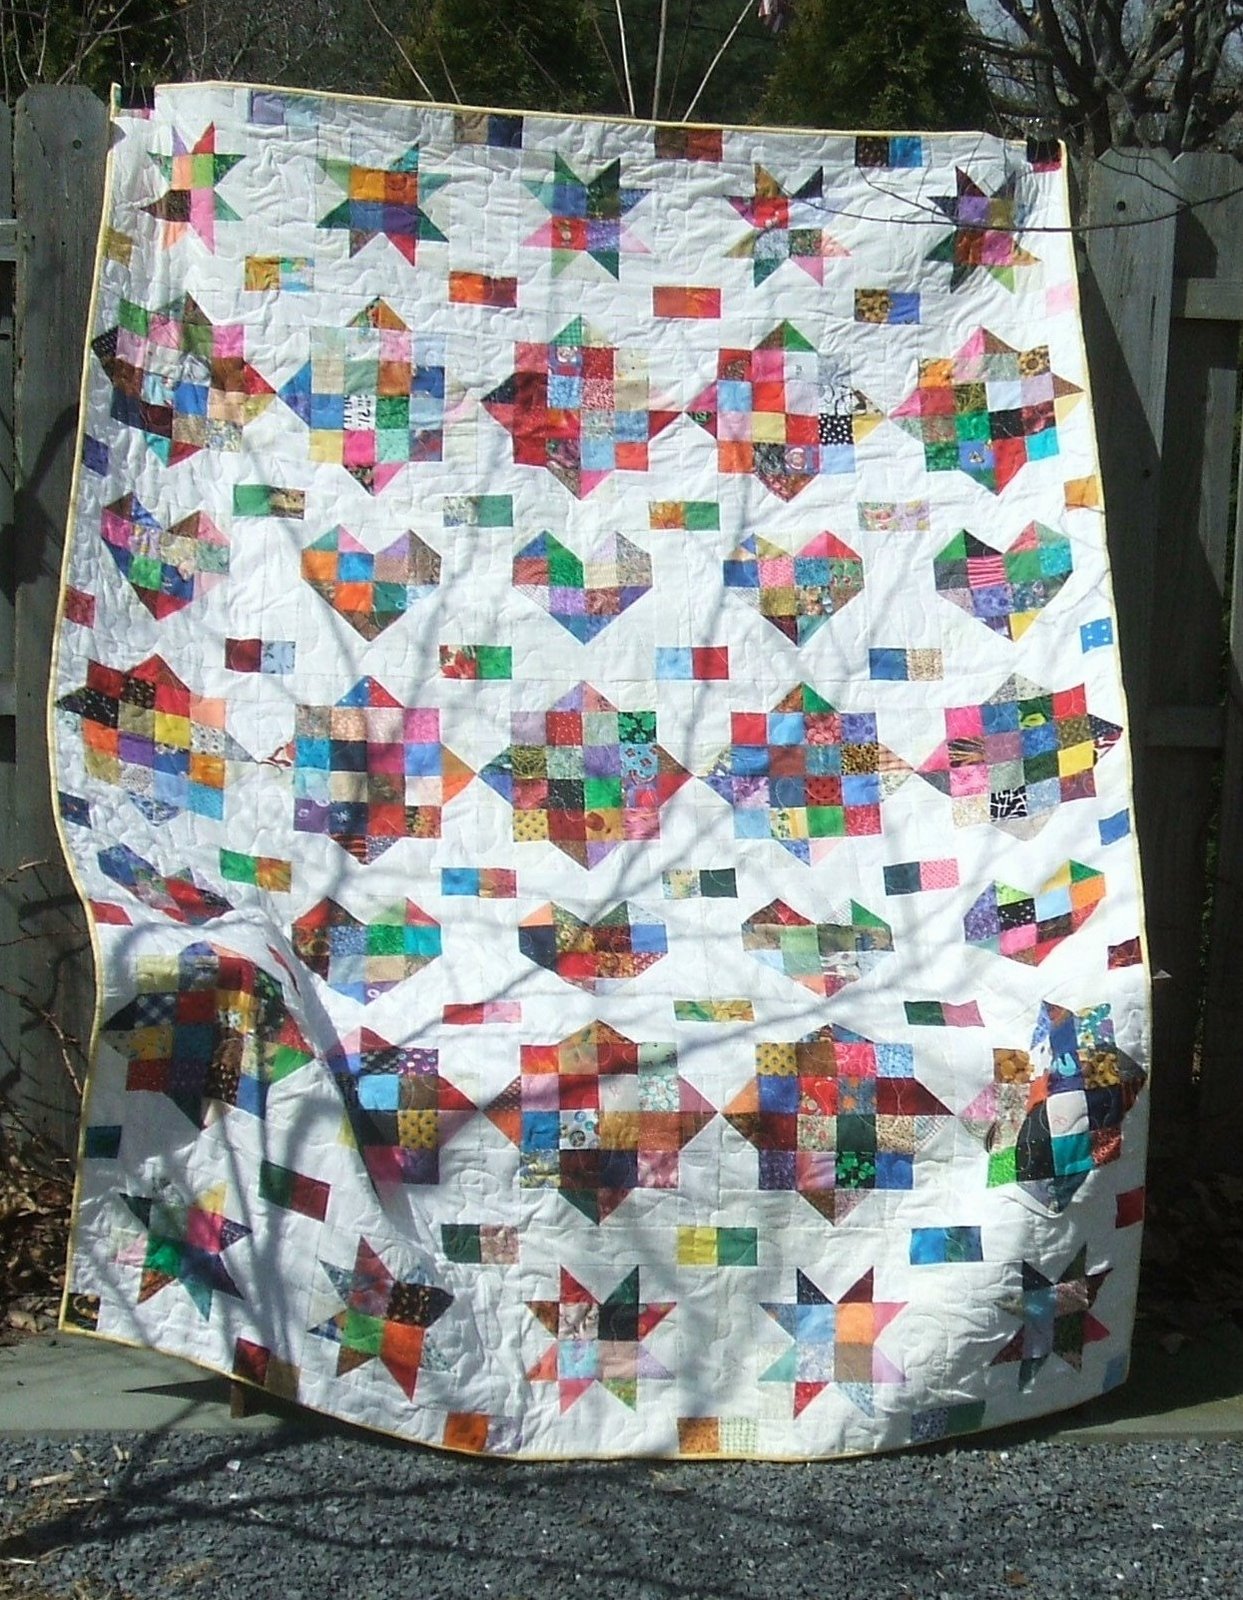 quilt block patterns | eBay - Electronics, Cars, Fashion